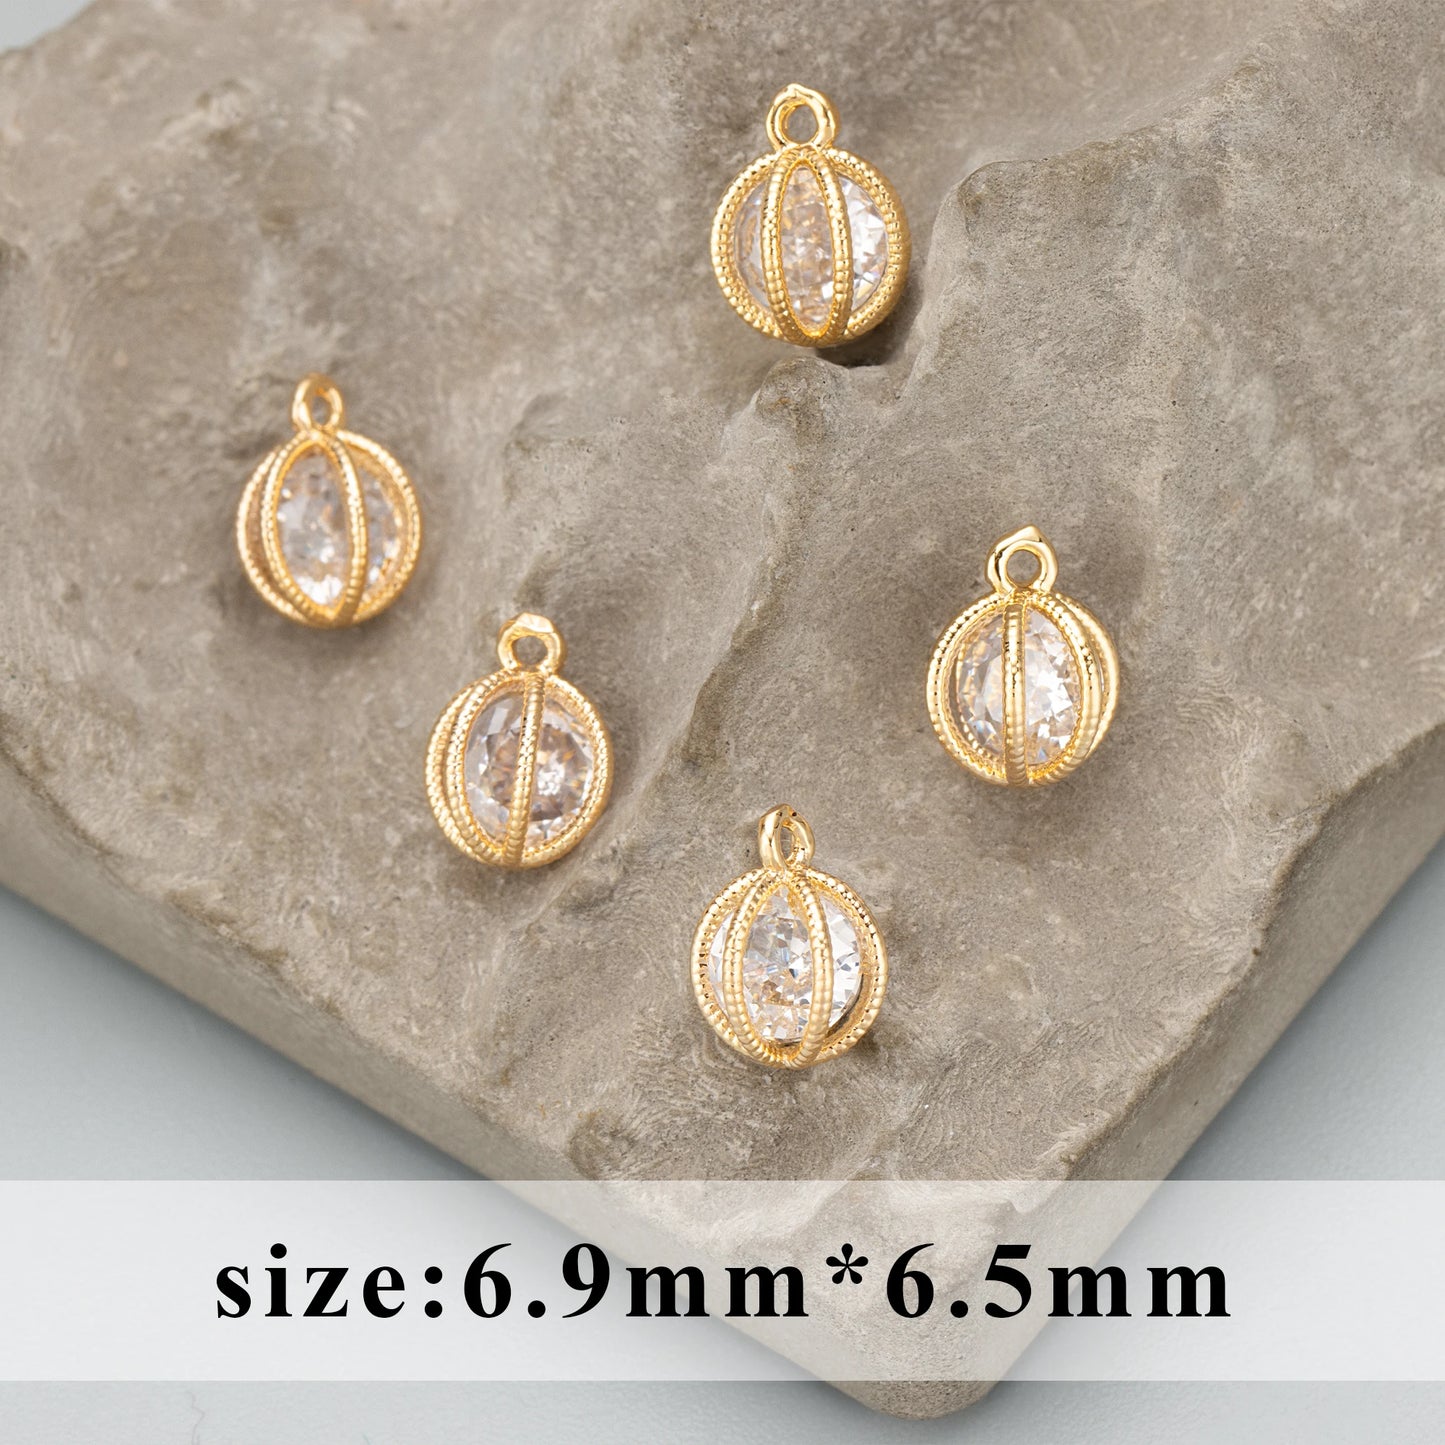 GUFEATHER M829,jewelry accessories,pass REACH,nickel free,18k gold plated,zircon pendants,jewelry making,diy earrings,10pcs/lot